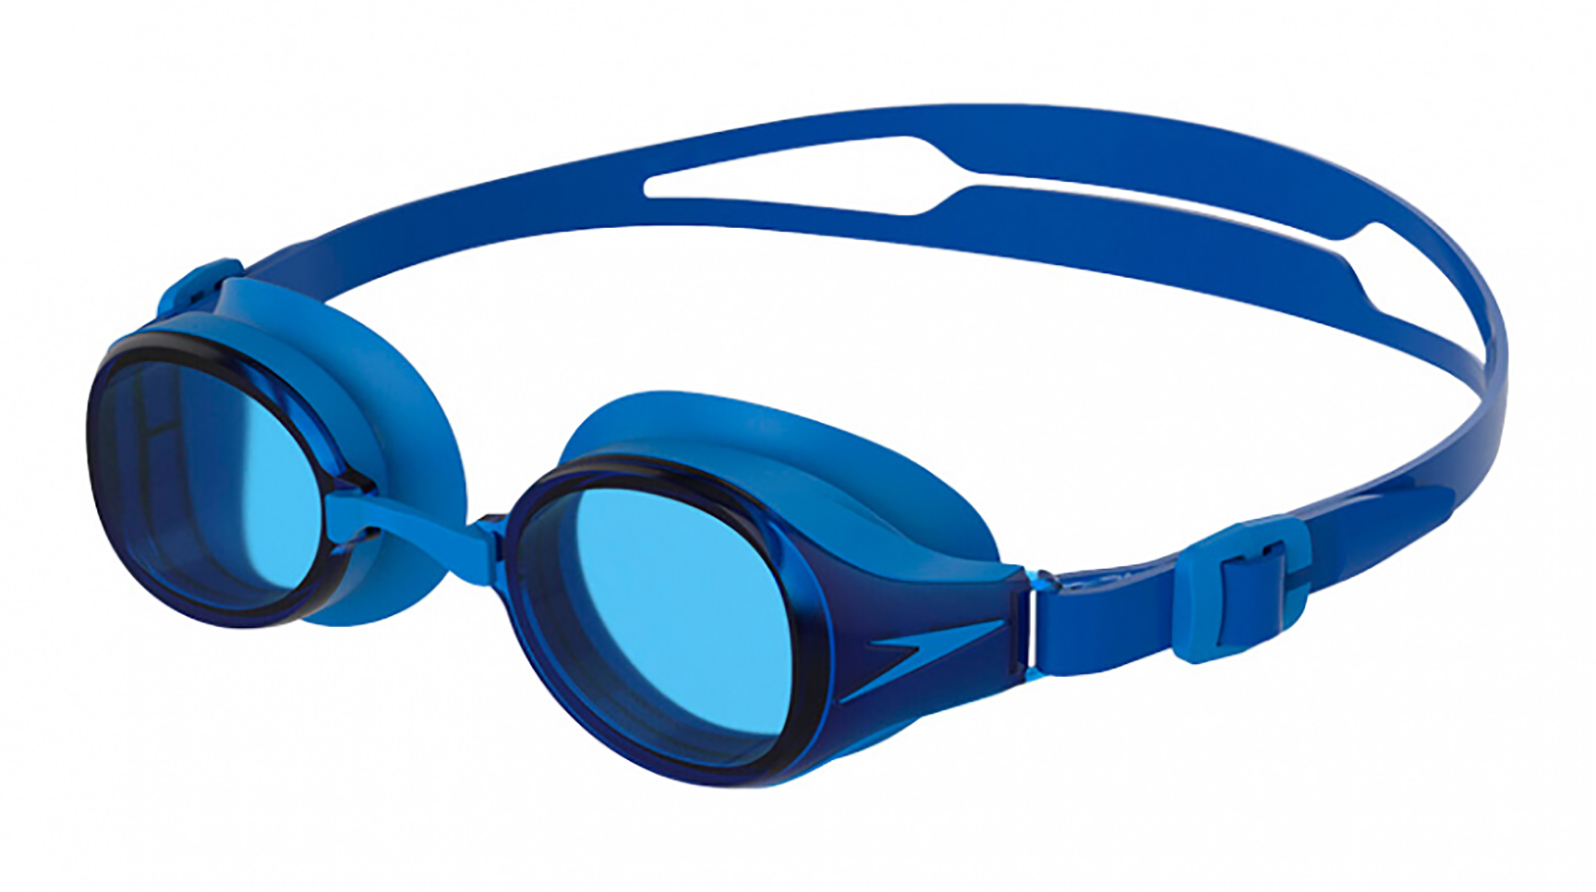 Speedo Очки для плавания Hydropure Optical F809 -3,5 speedo очки для плавания hydropure optical f809 2 5